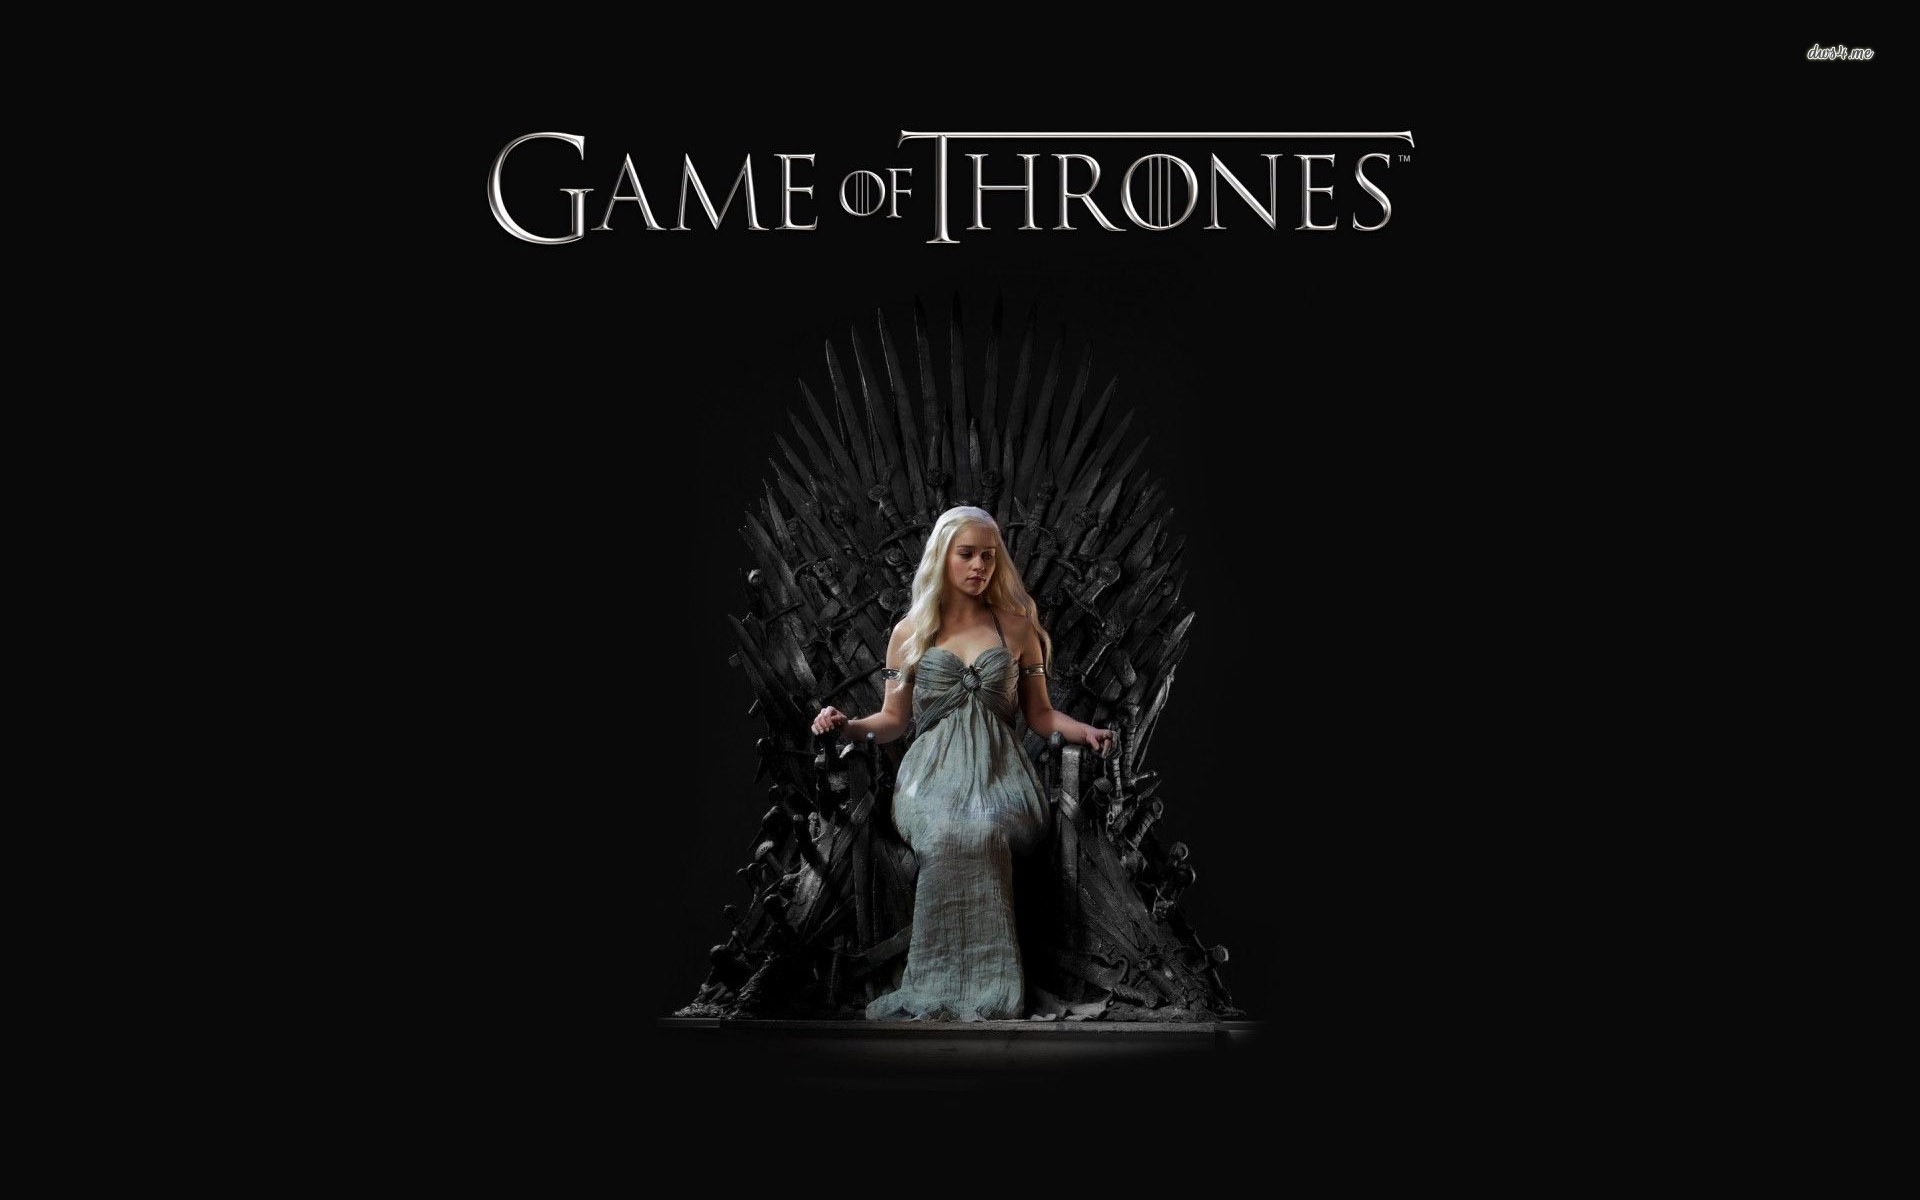  Game  of Thrones  wallpaper  HD    Download free beautiful HD  